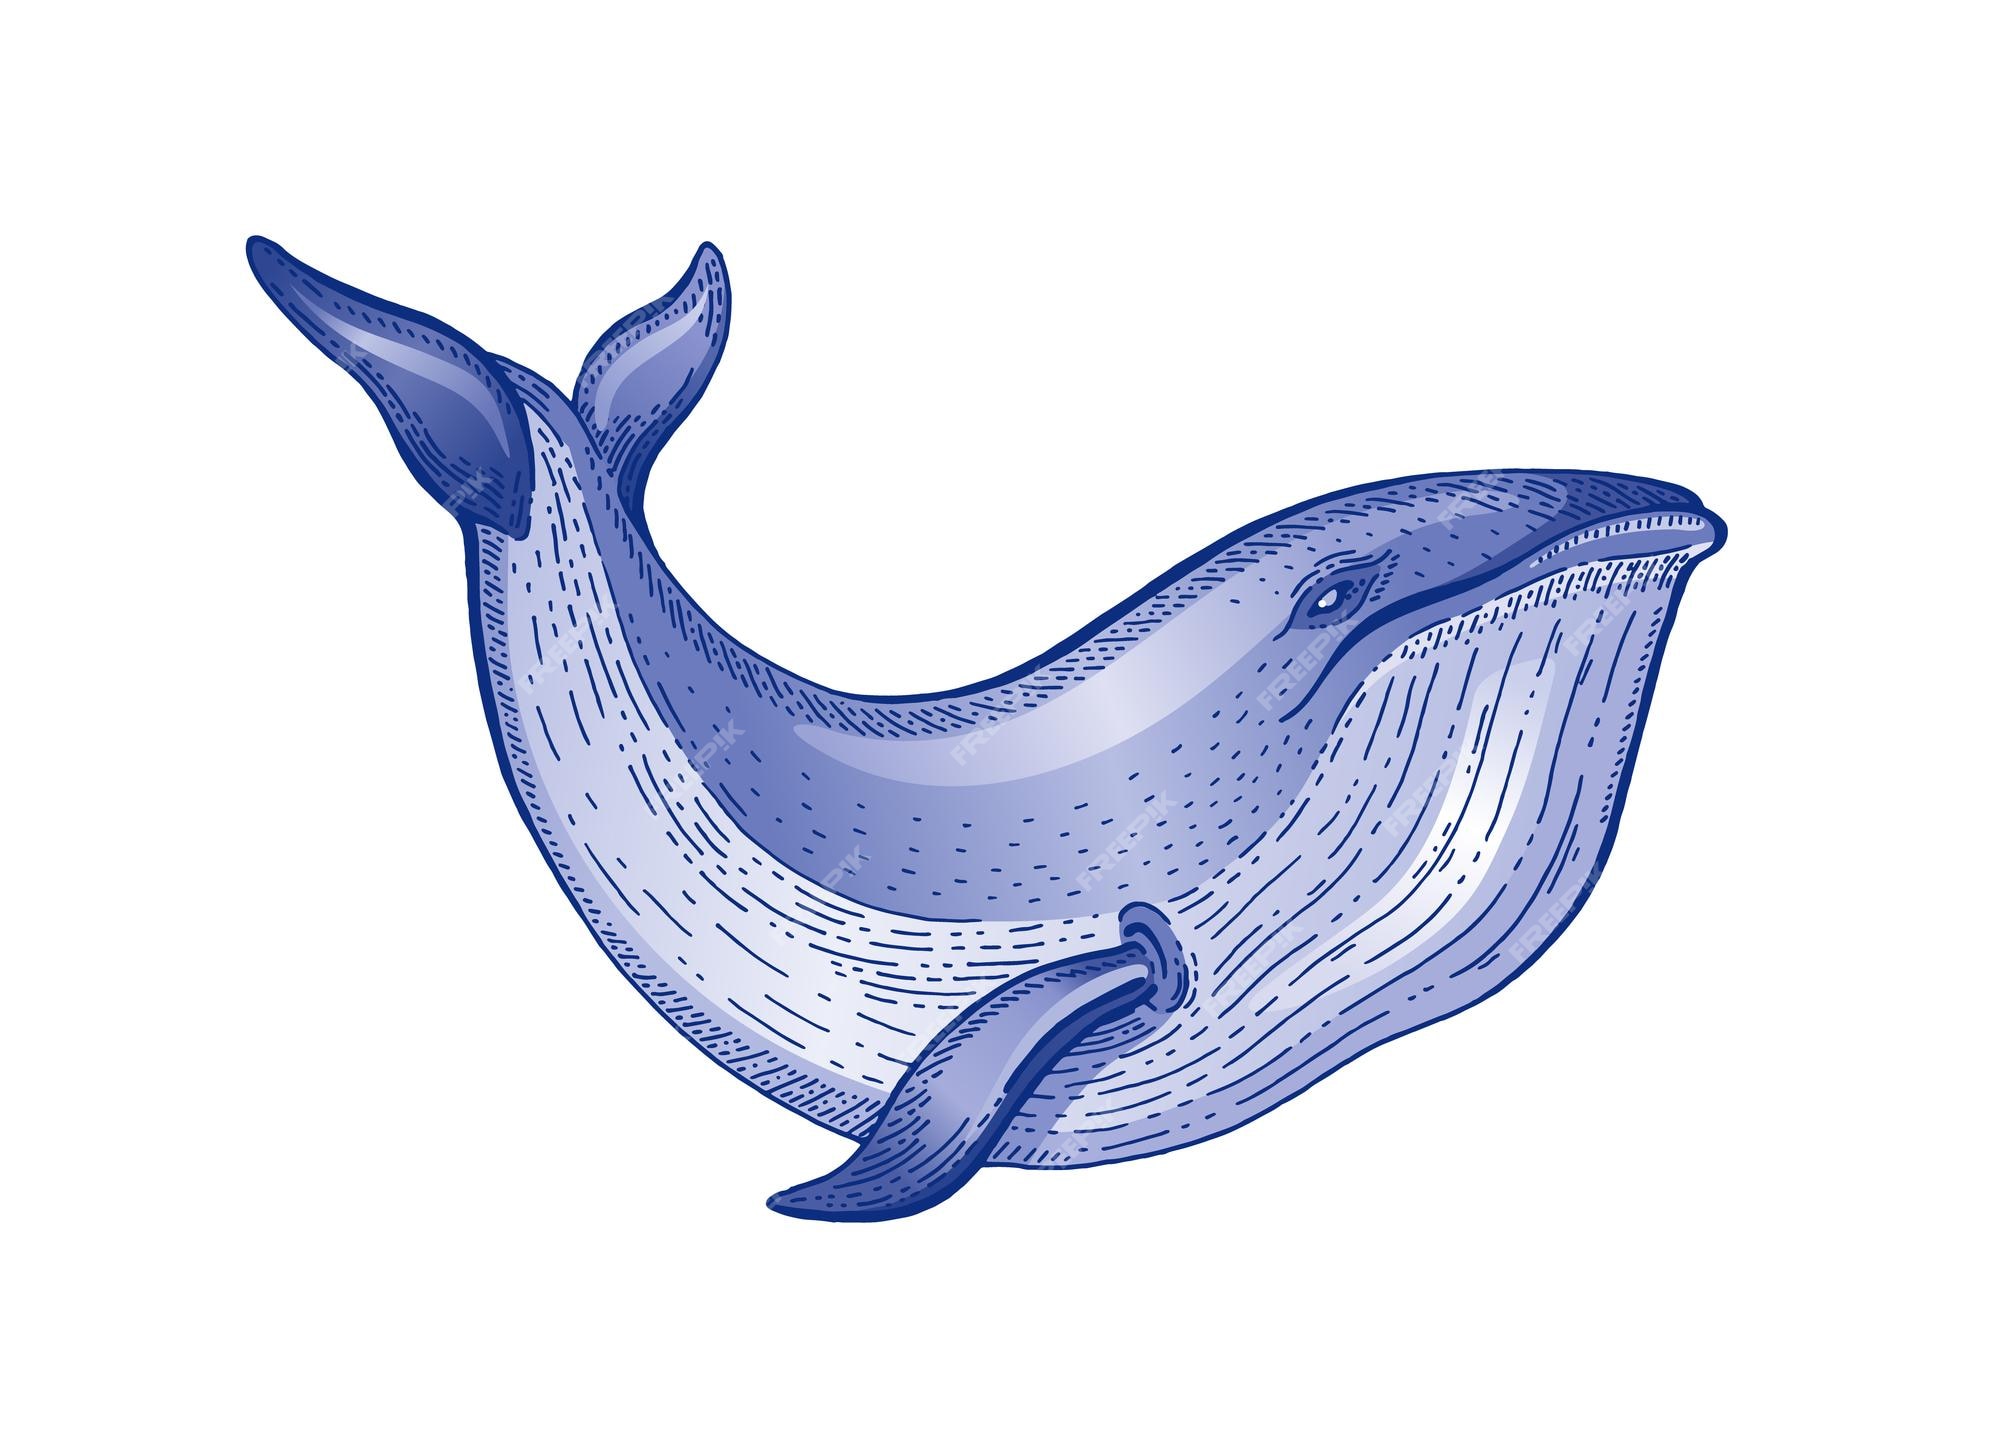 Bosquejo de acuarela de ballena ilustraciãn vectorial vintage arte de lãnea dibujada a mano de animal marinos dibujo grabado de ballena azul diseão de color de agua de vida oceãnica para impriãn